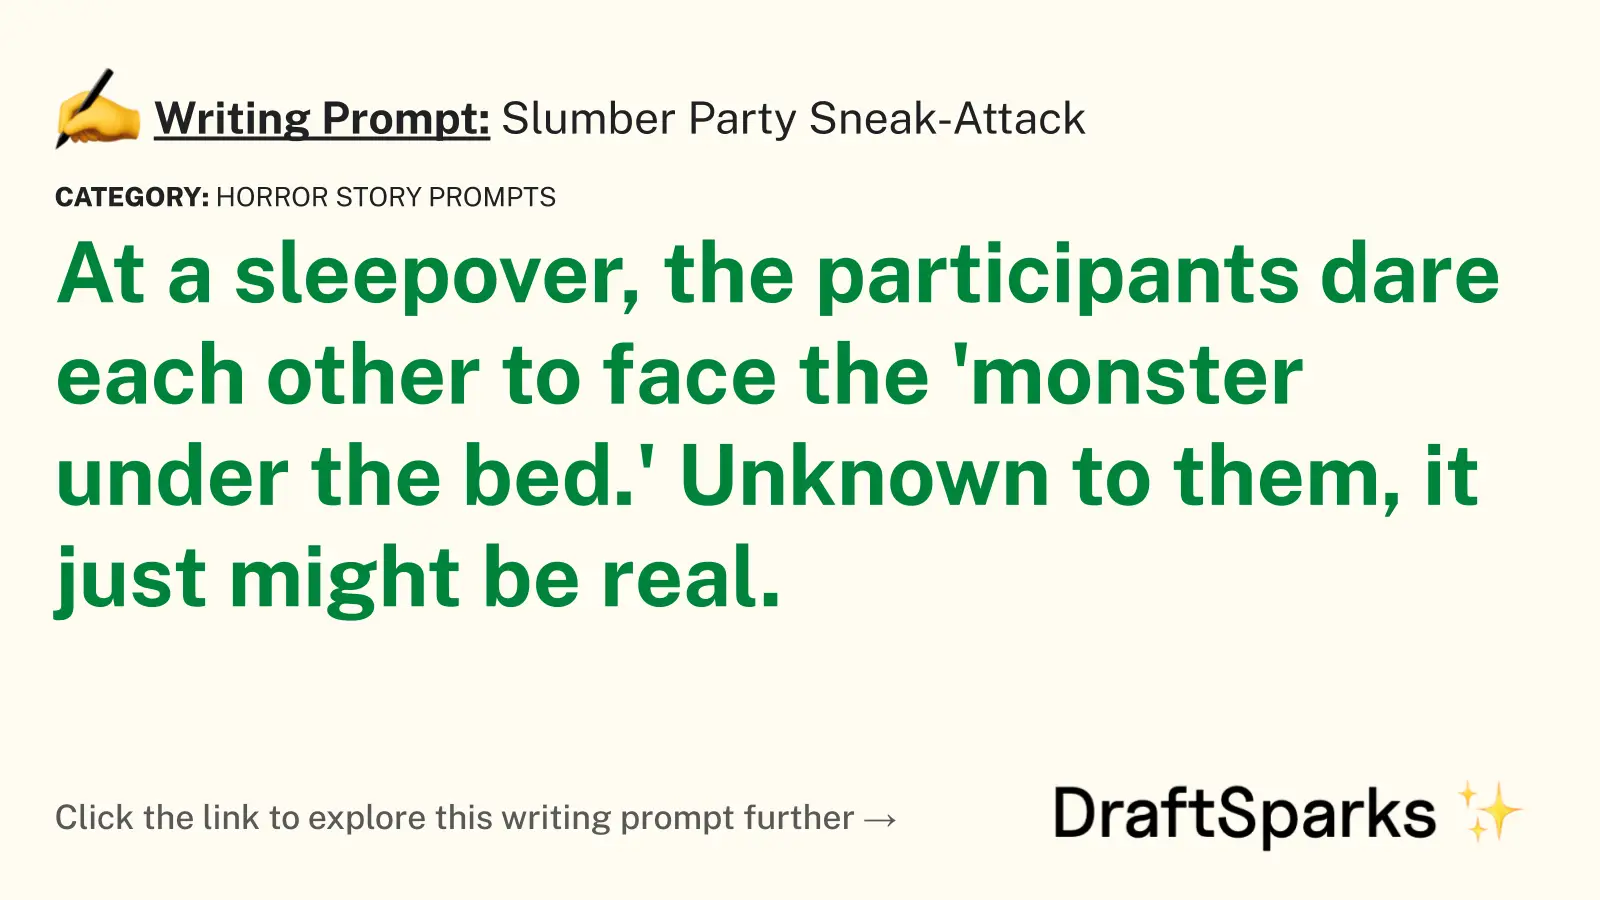 Slumber Party Sneak-Attack